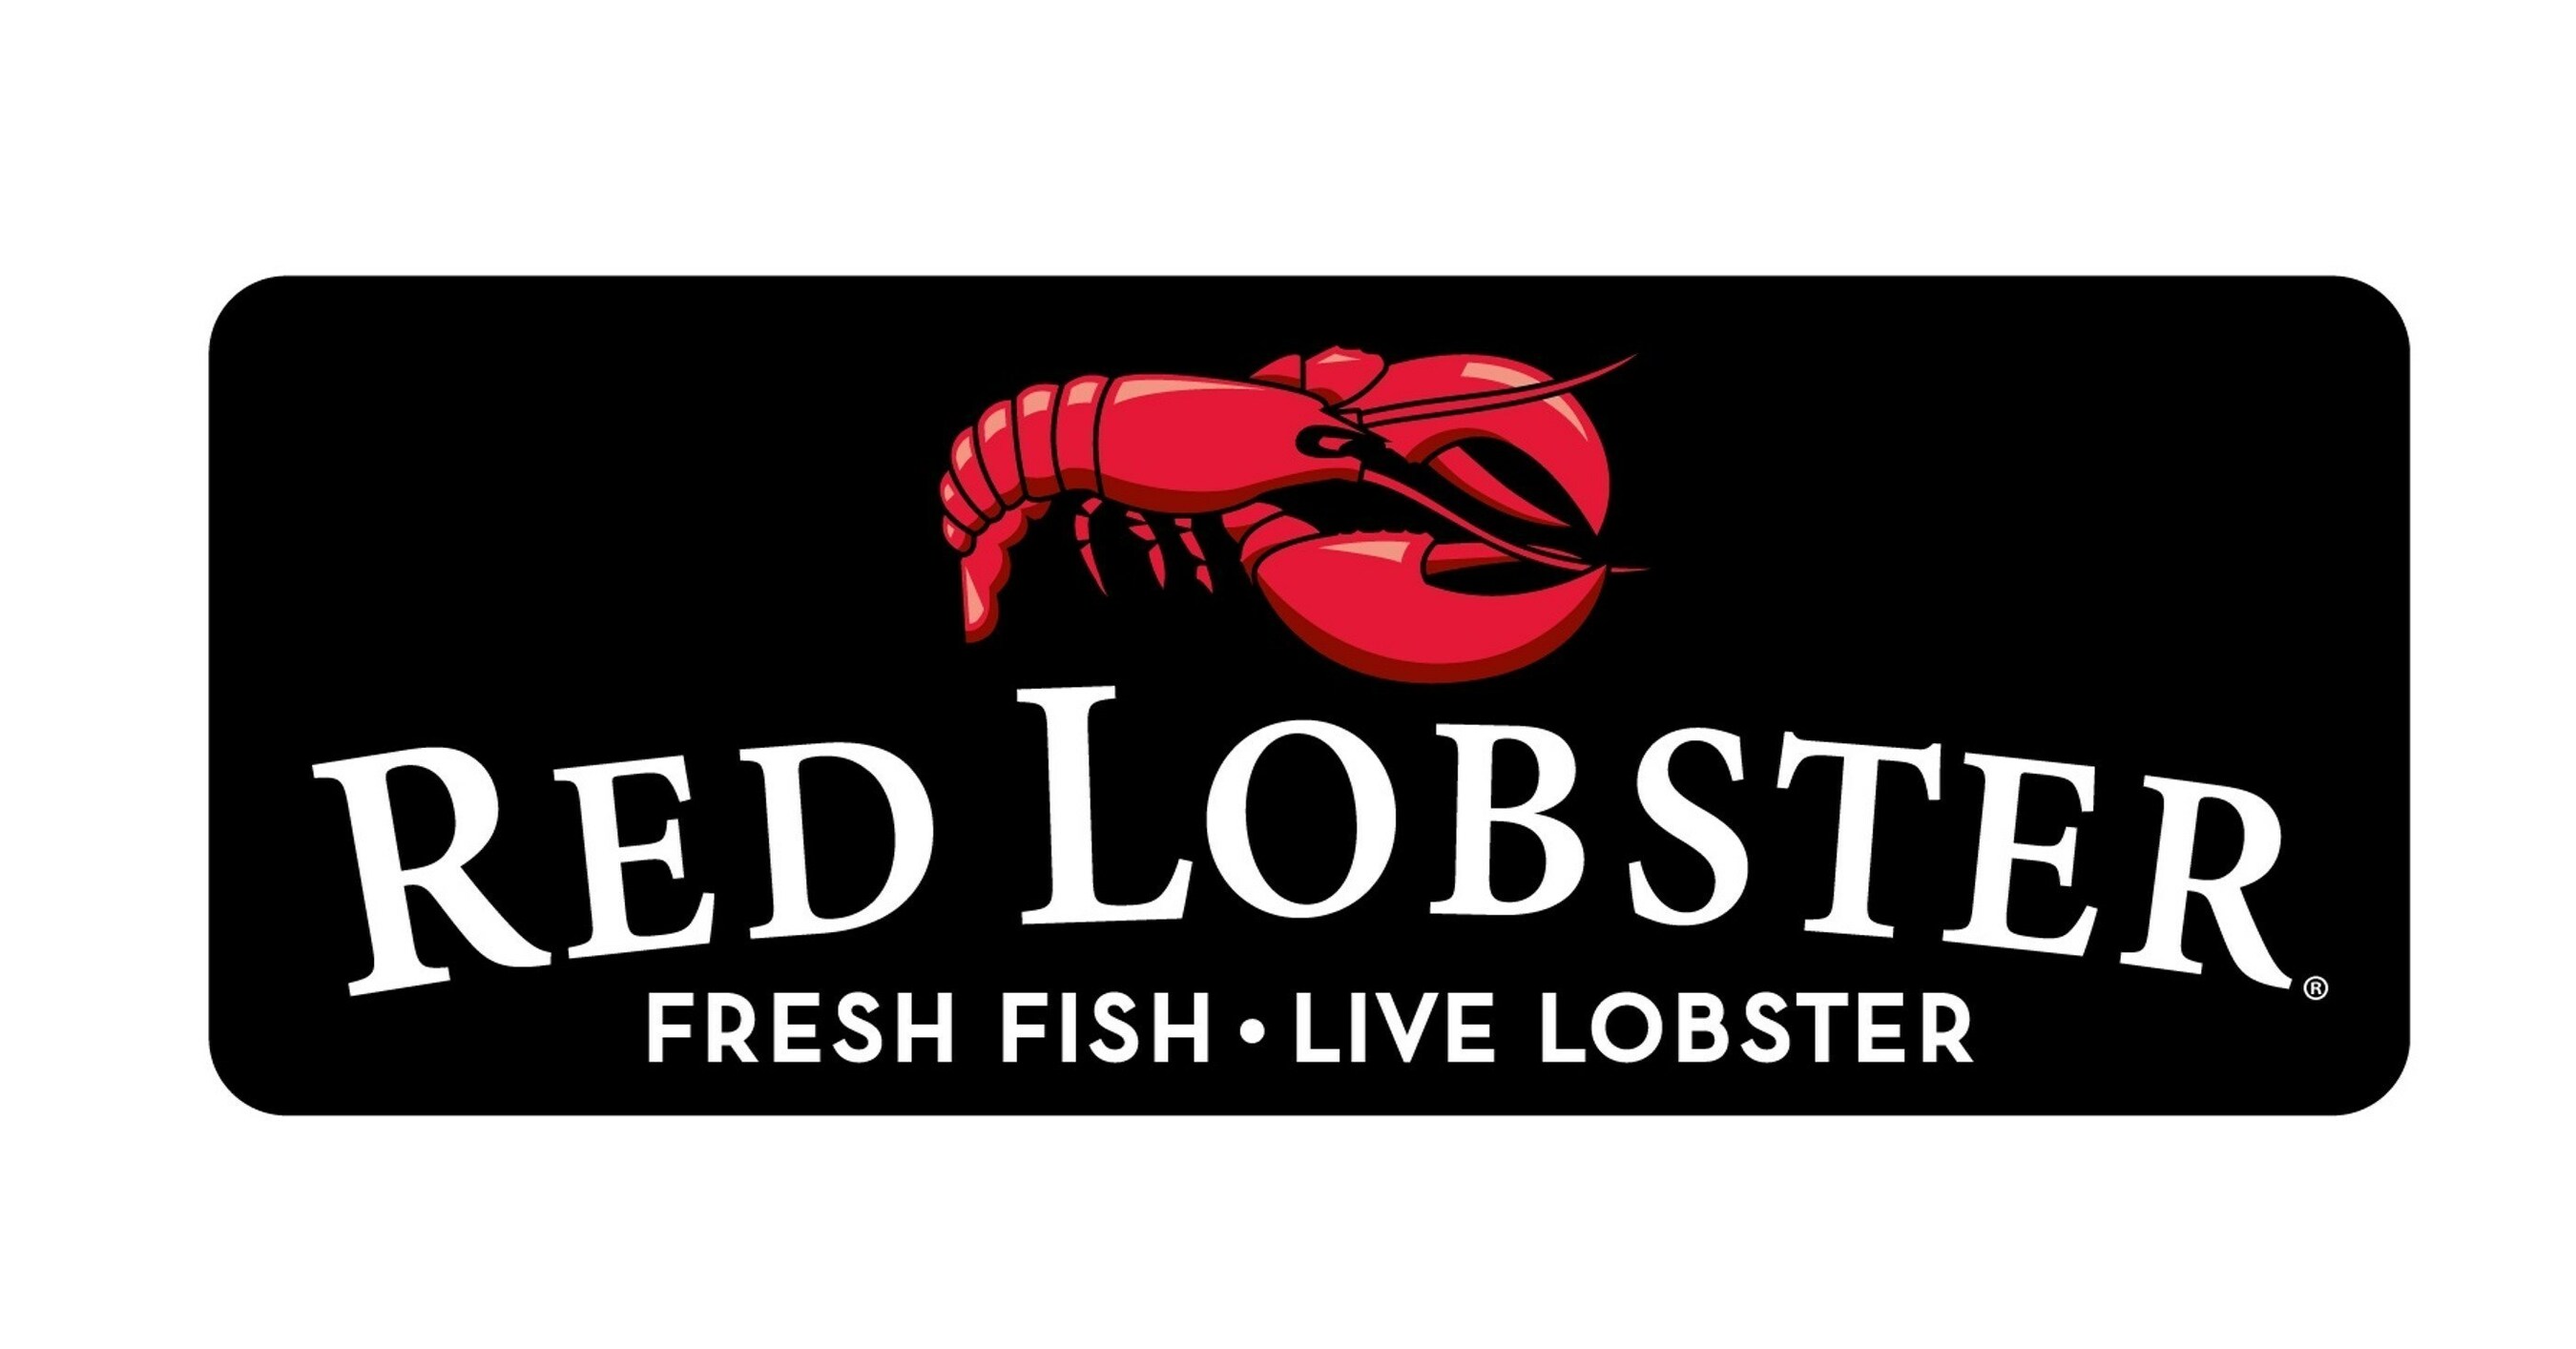 Red Lobster Sales Us 2011 2017 Statista [ 253 x 355 Pixel ]